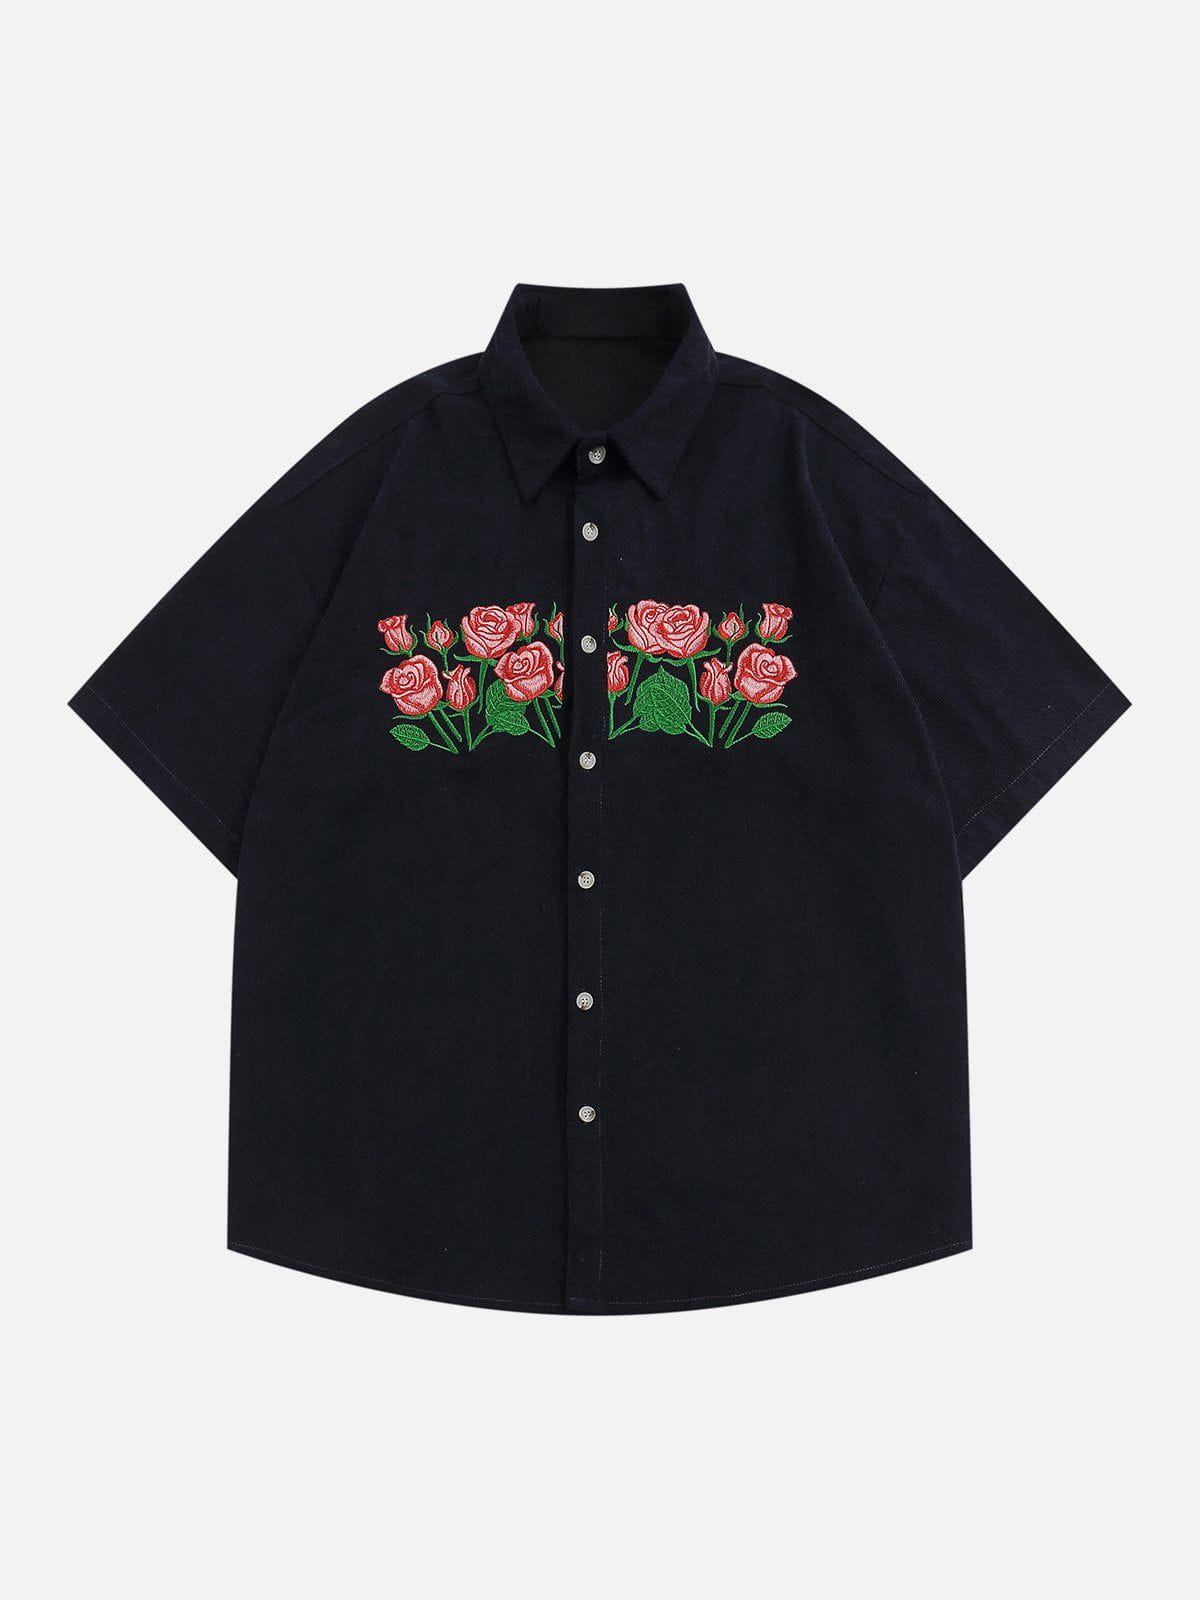 Eprezzy® - Rose Embroidered Corduroy Short Sleeve Shirts Streetwear Fashion - eprezzy.com